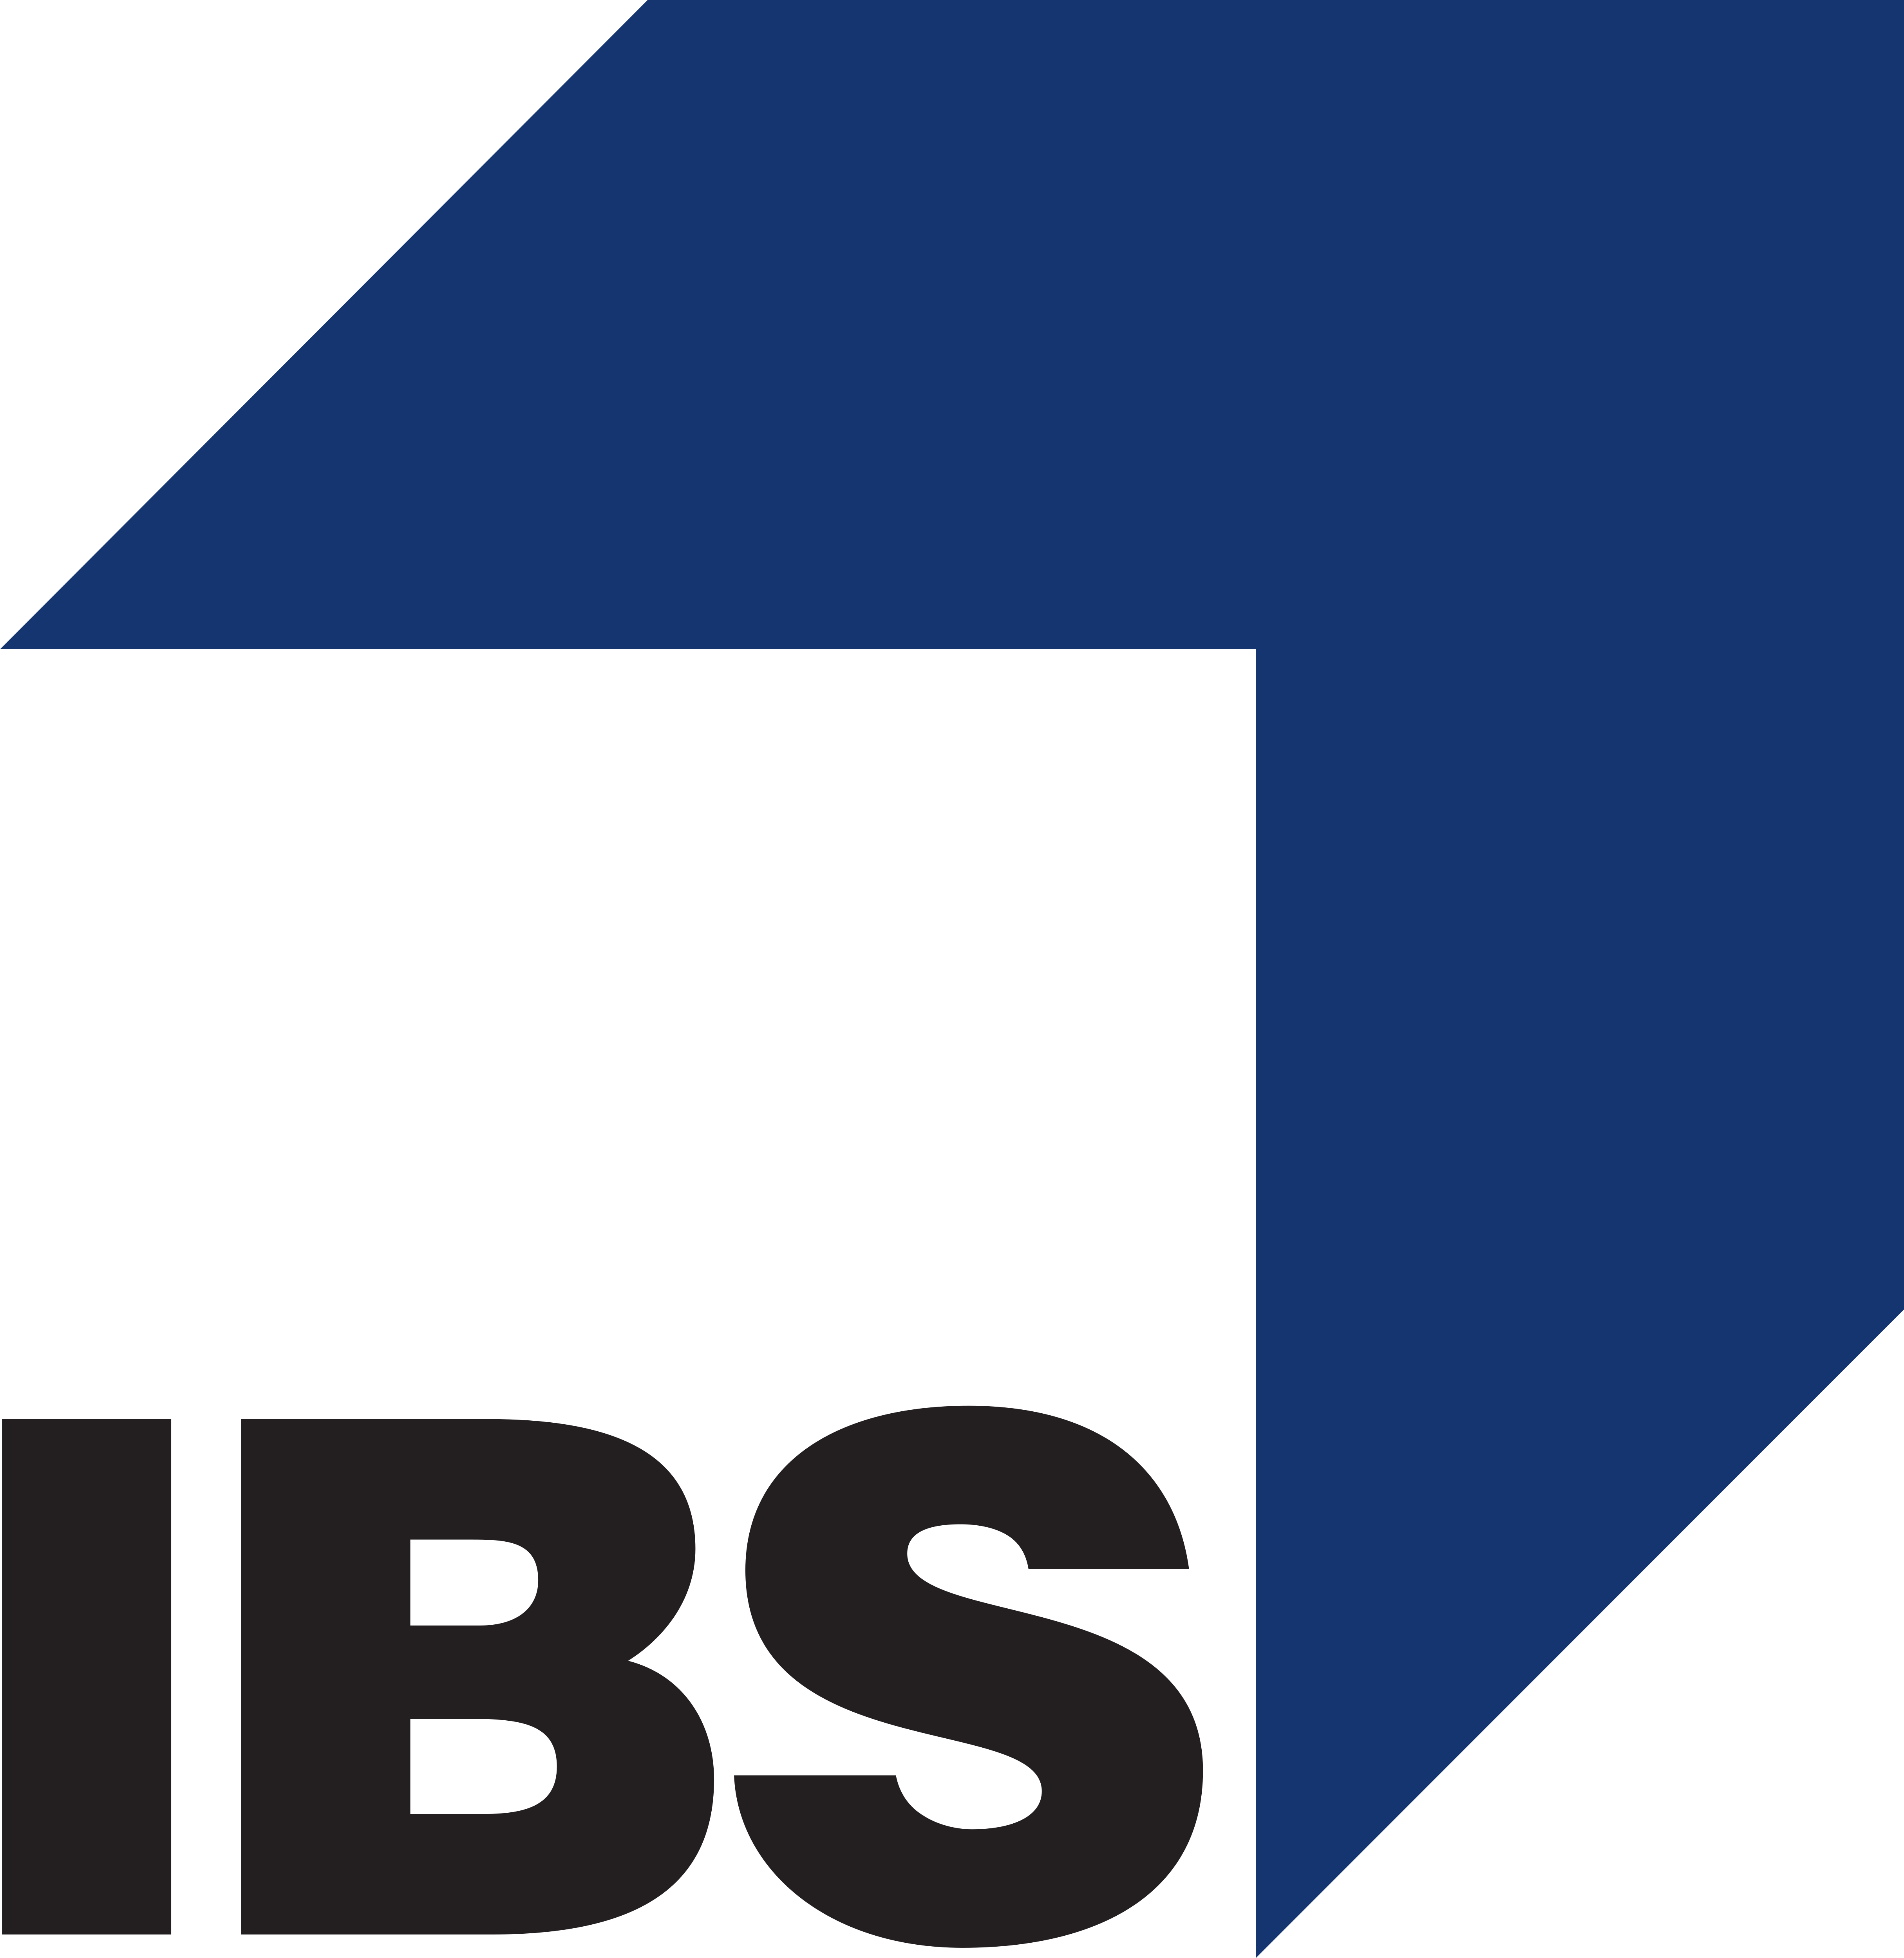 Ibs life. IBS компания. IBS лого. IBS Platformix логотип. IBS компания Нижний Новгород.